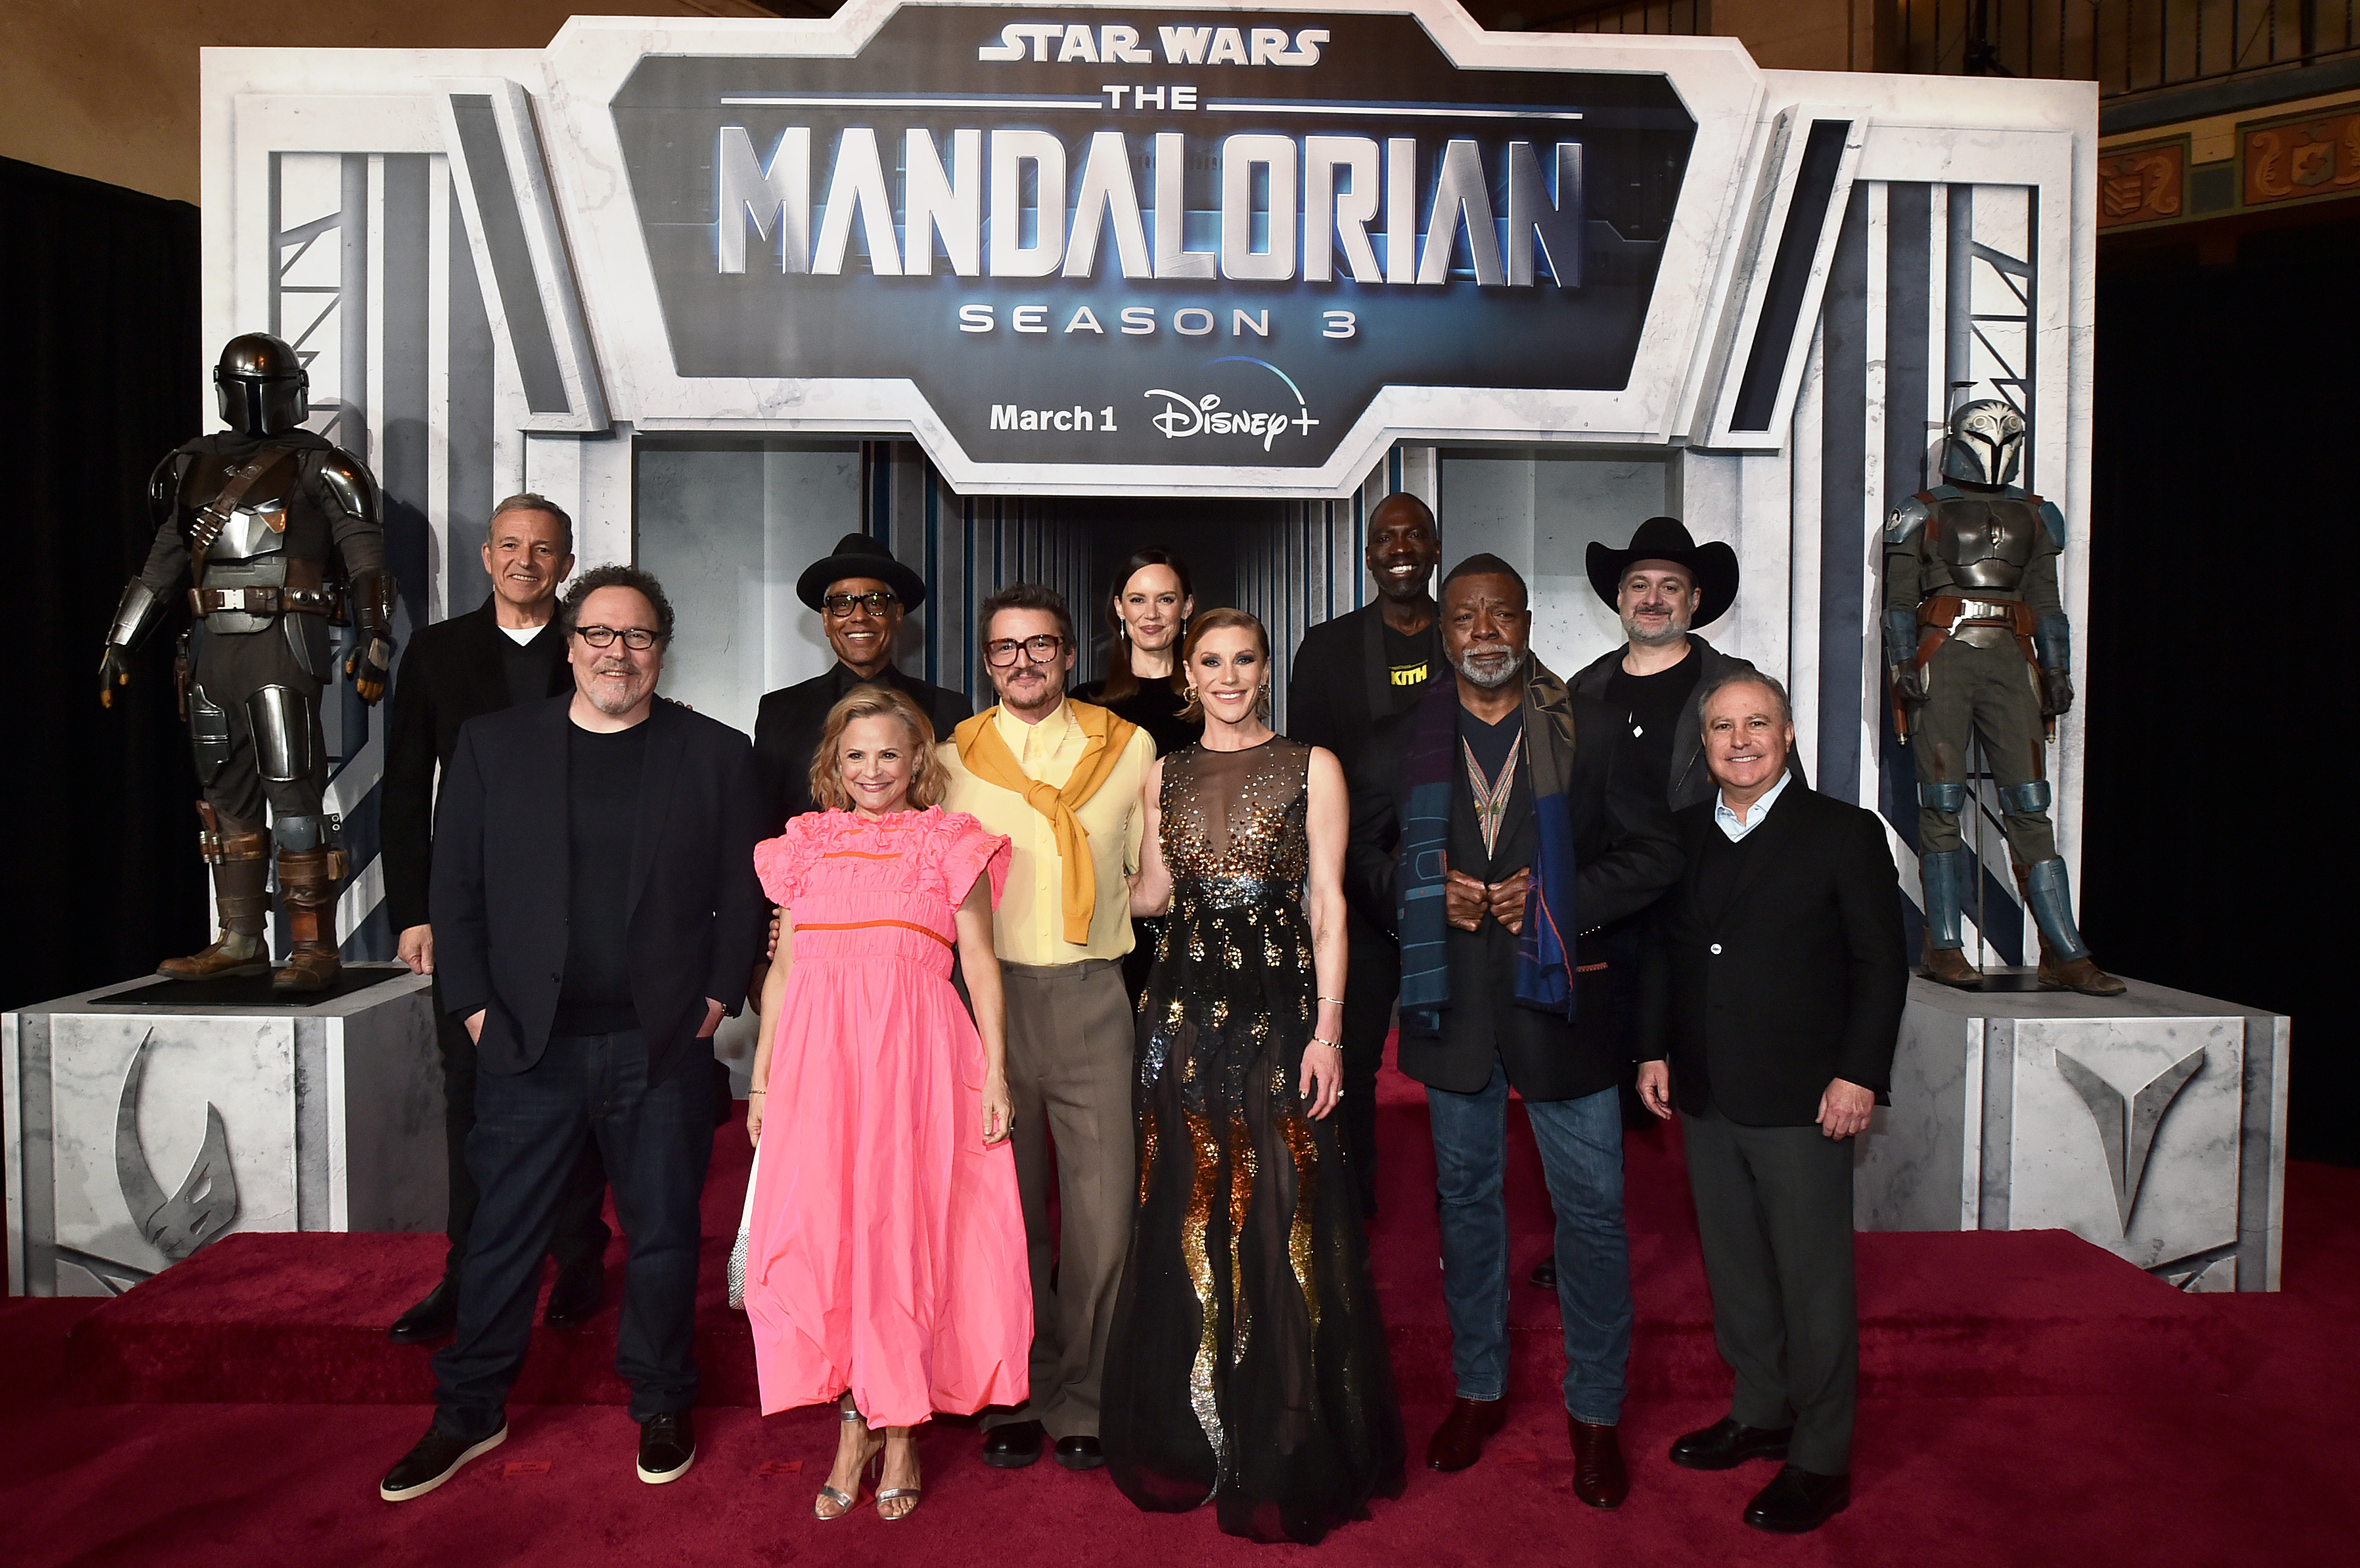 The Mandalorian: Season 3 Premiere Event